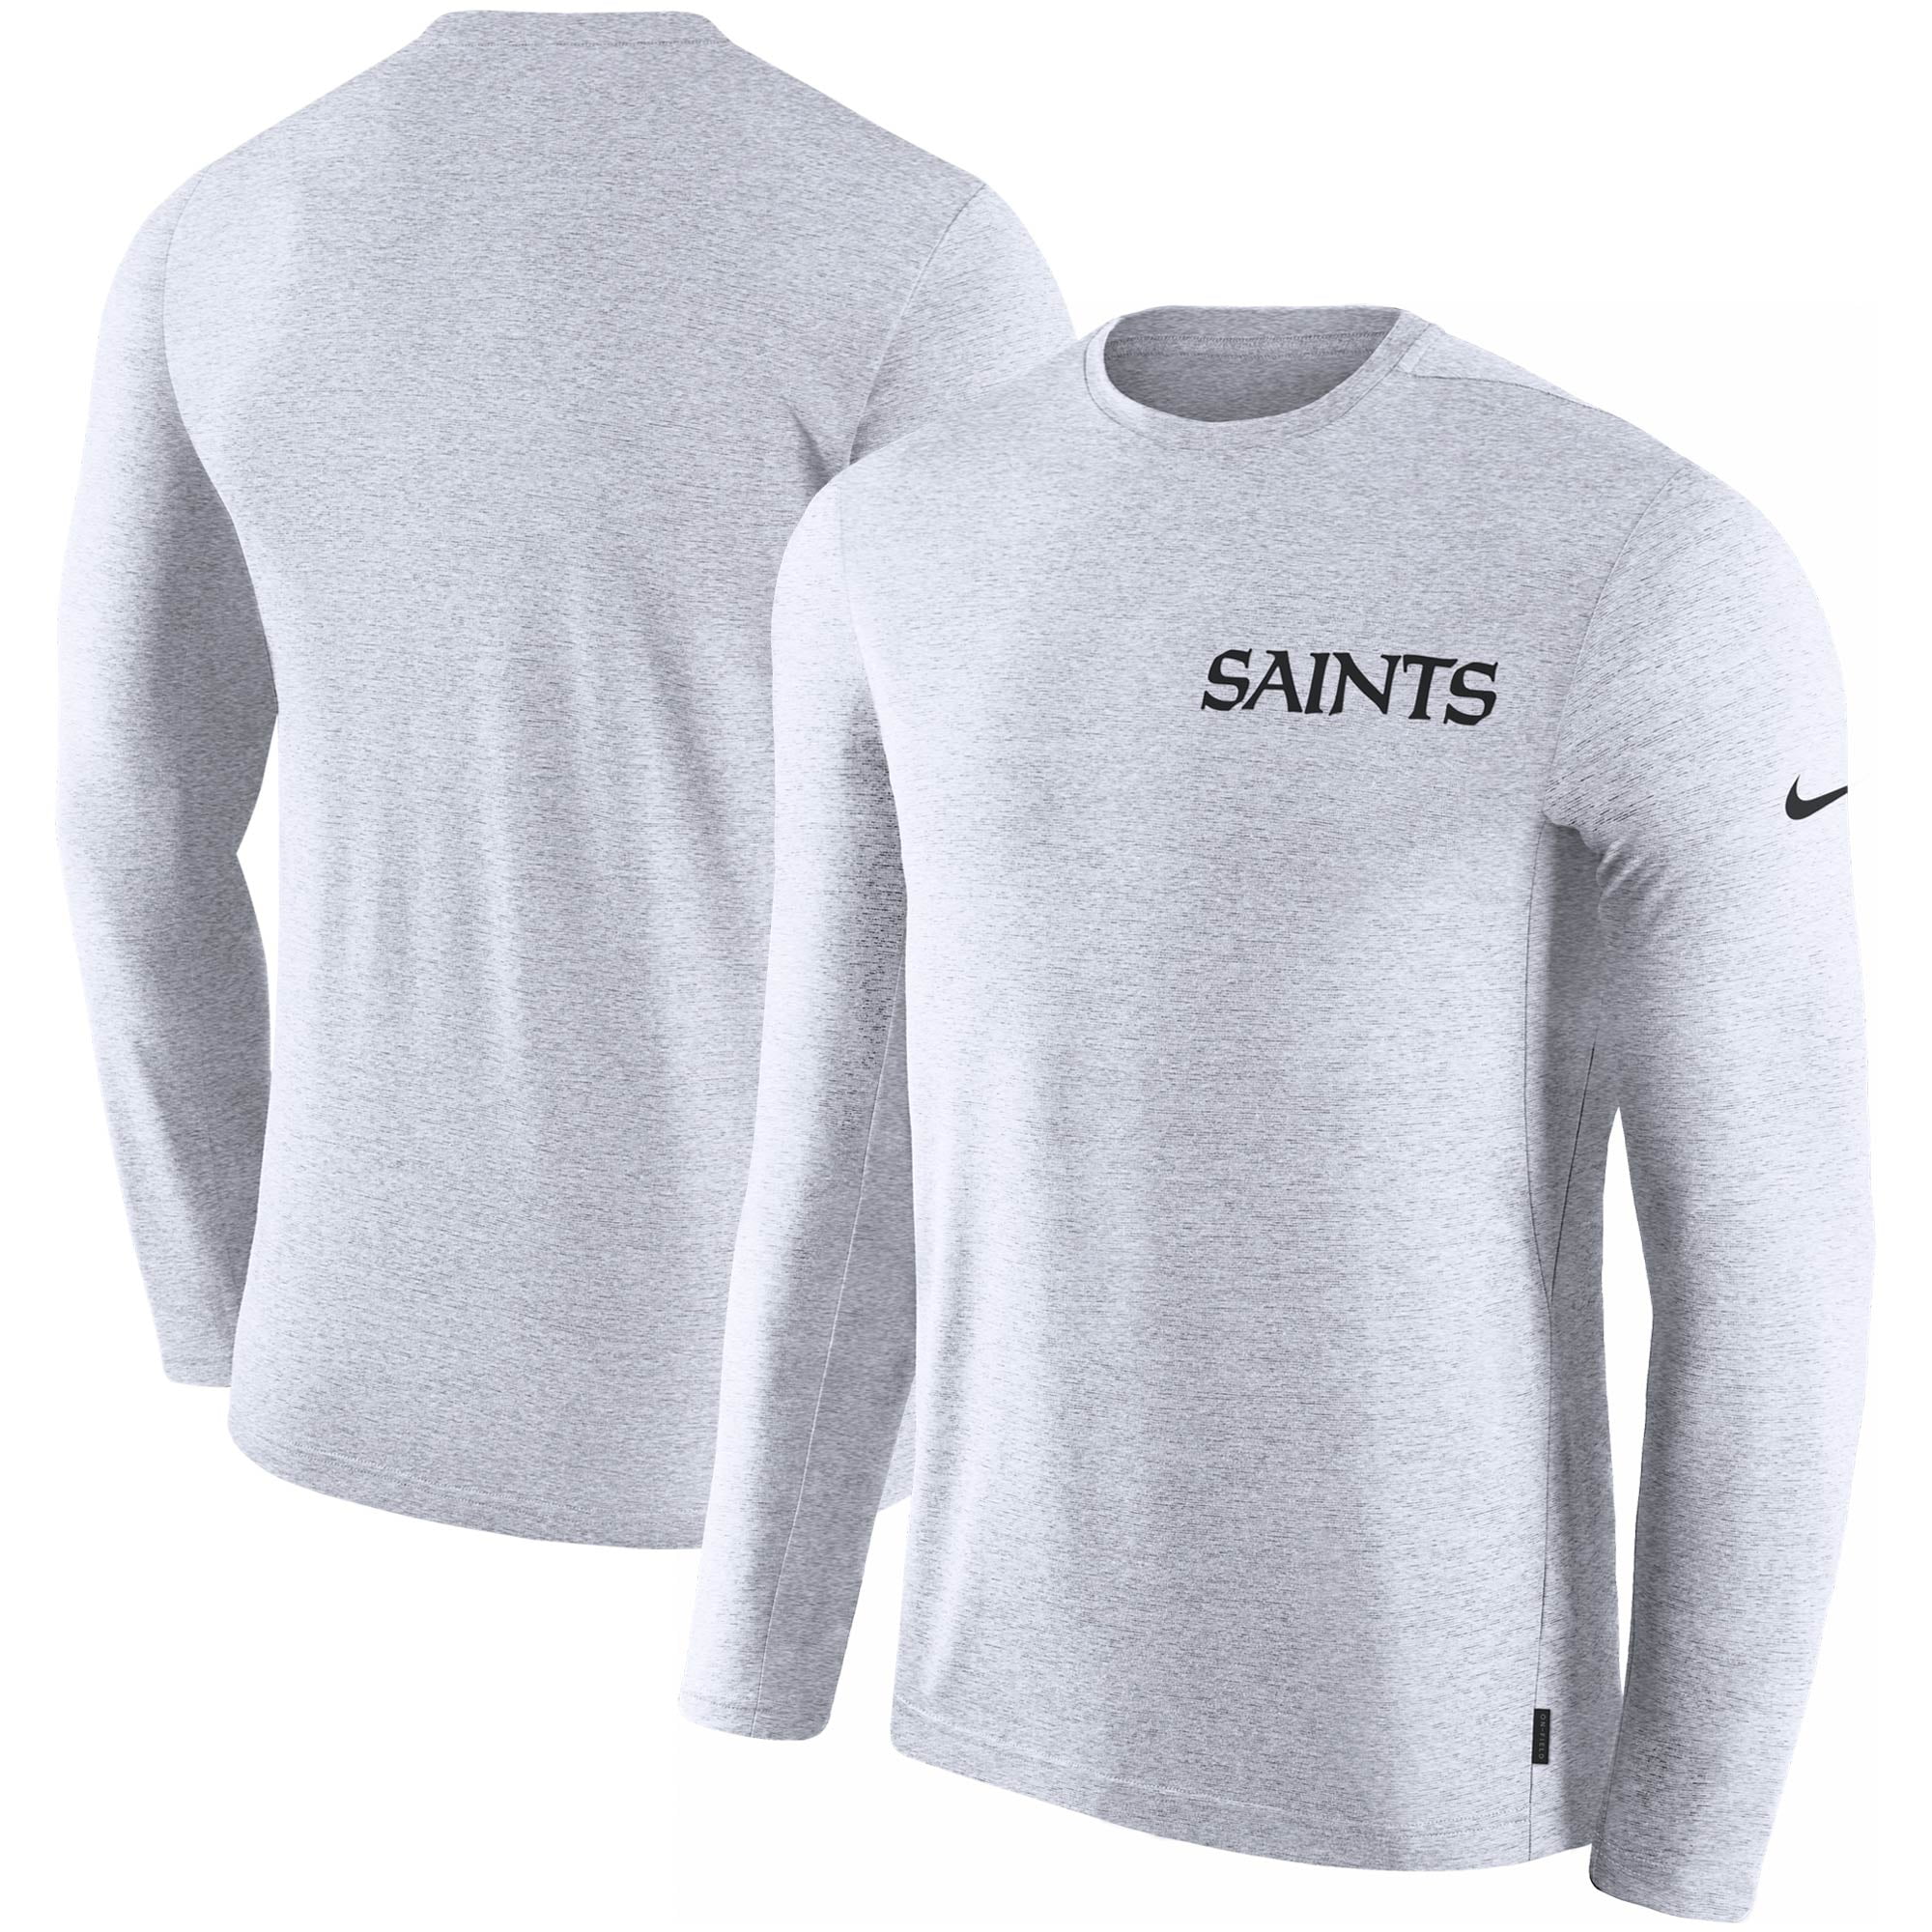 new orleans saints long sleeve shirt